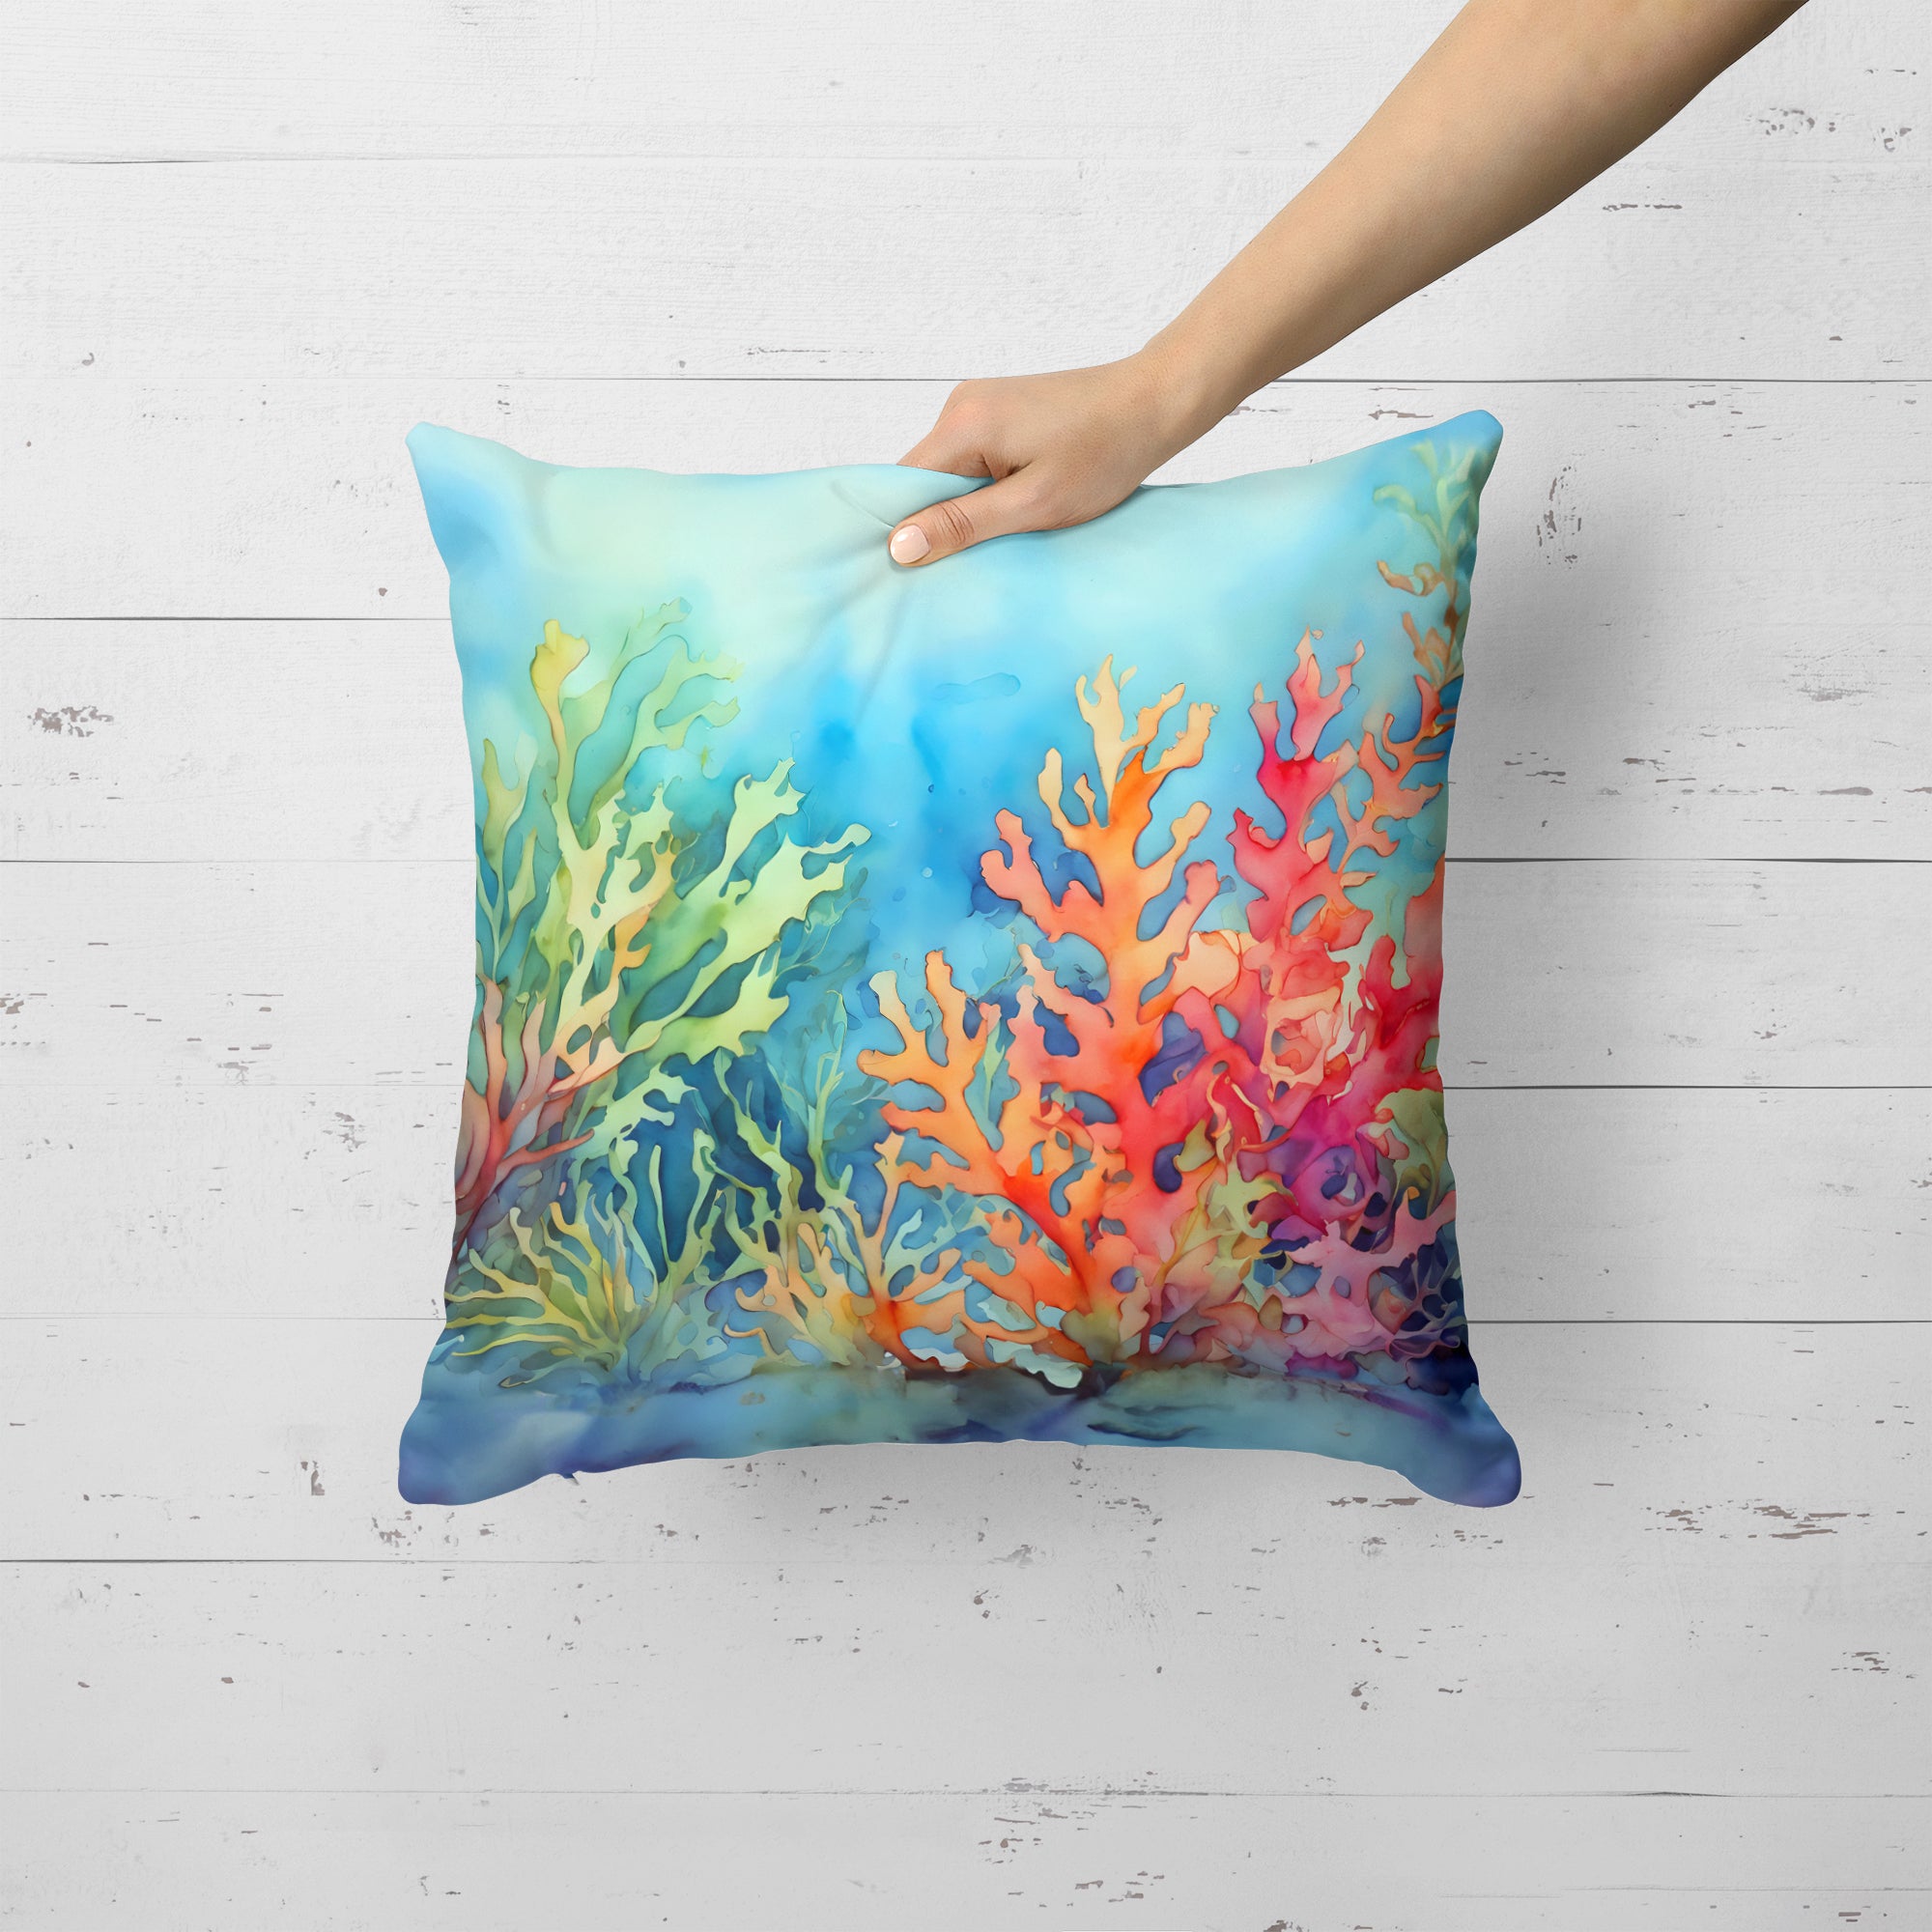 Buy this Seaweed Throw Pillow